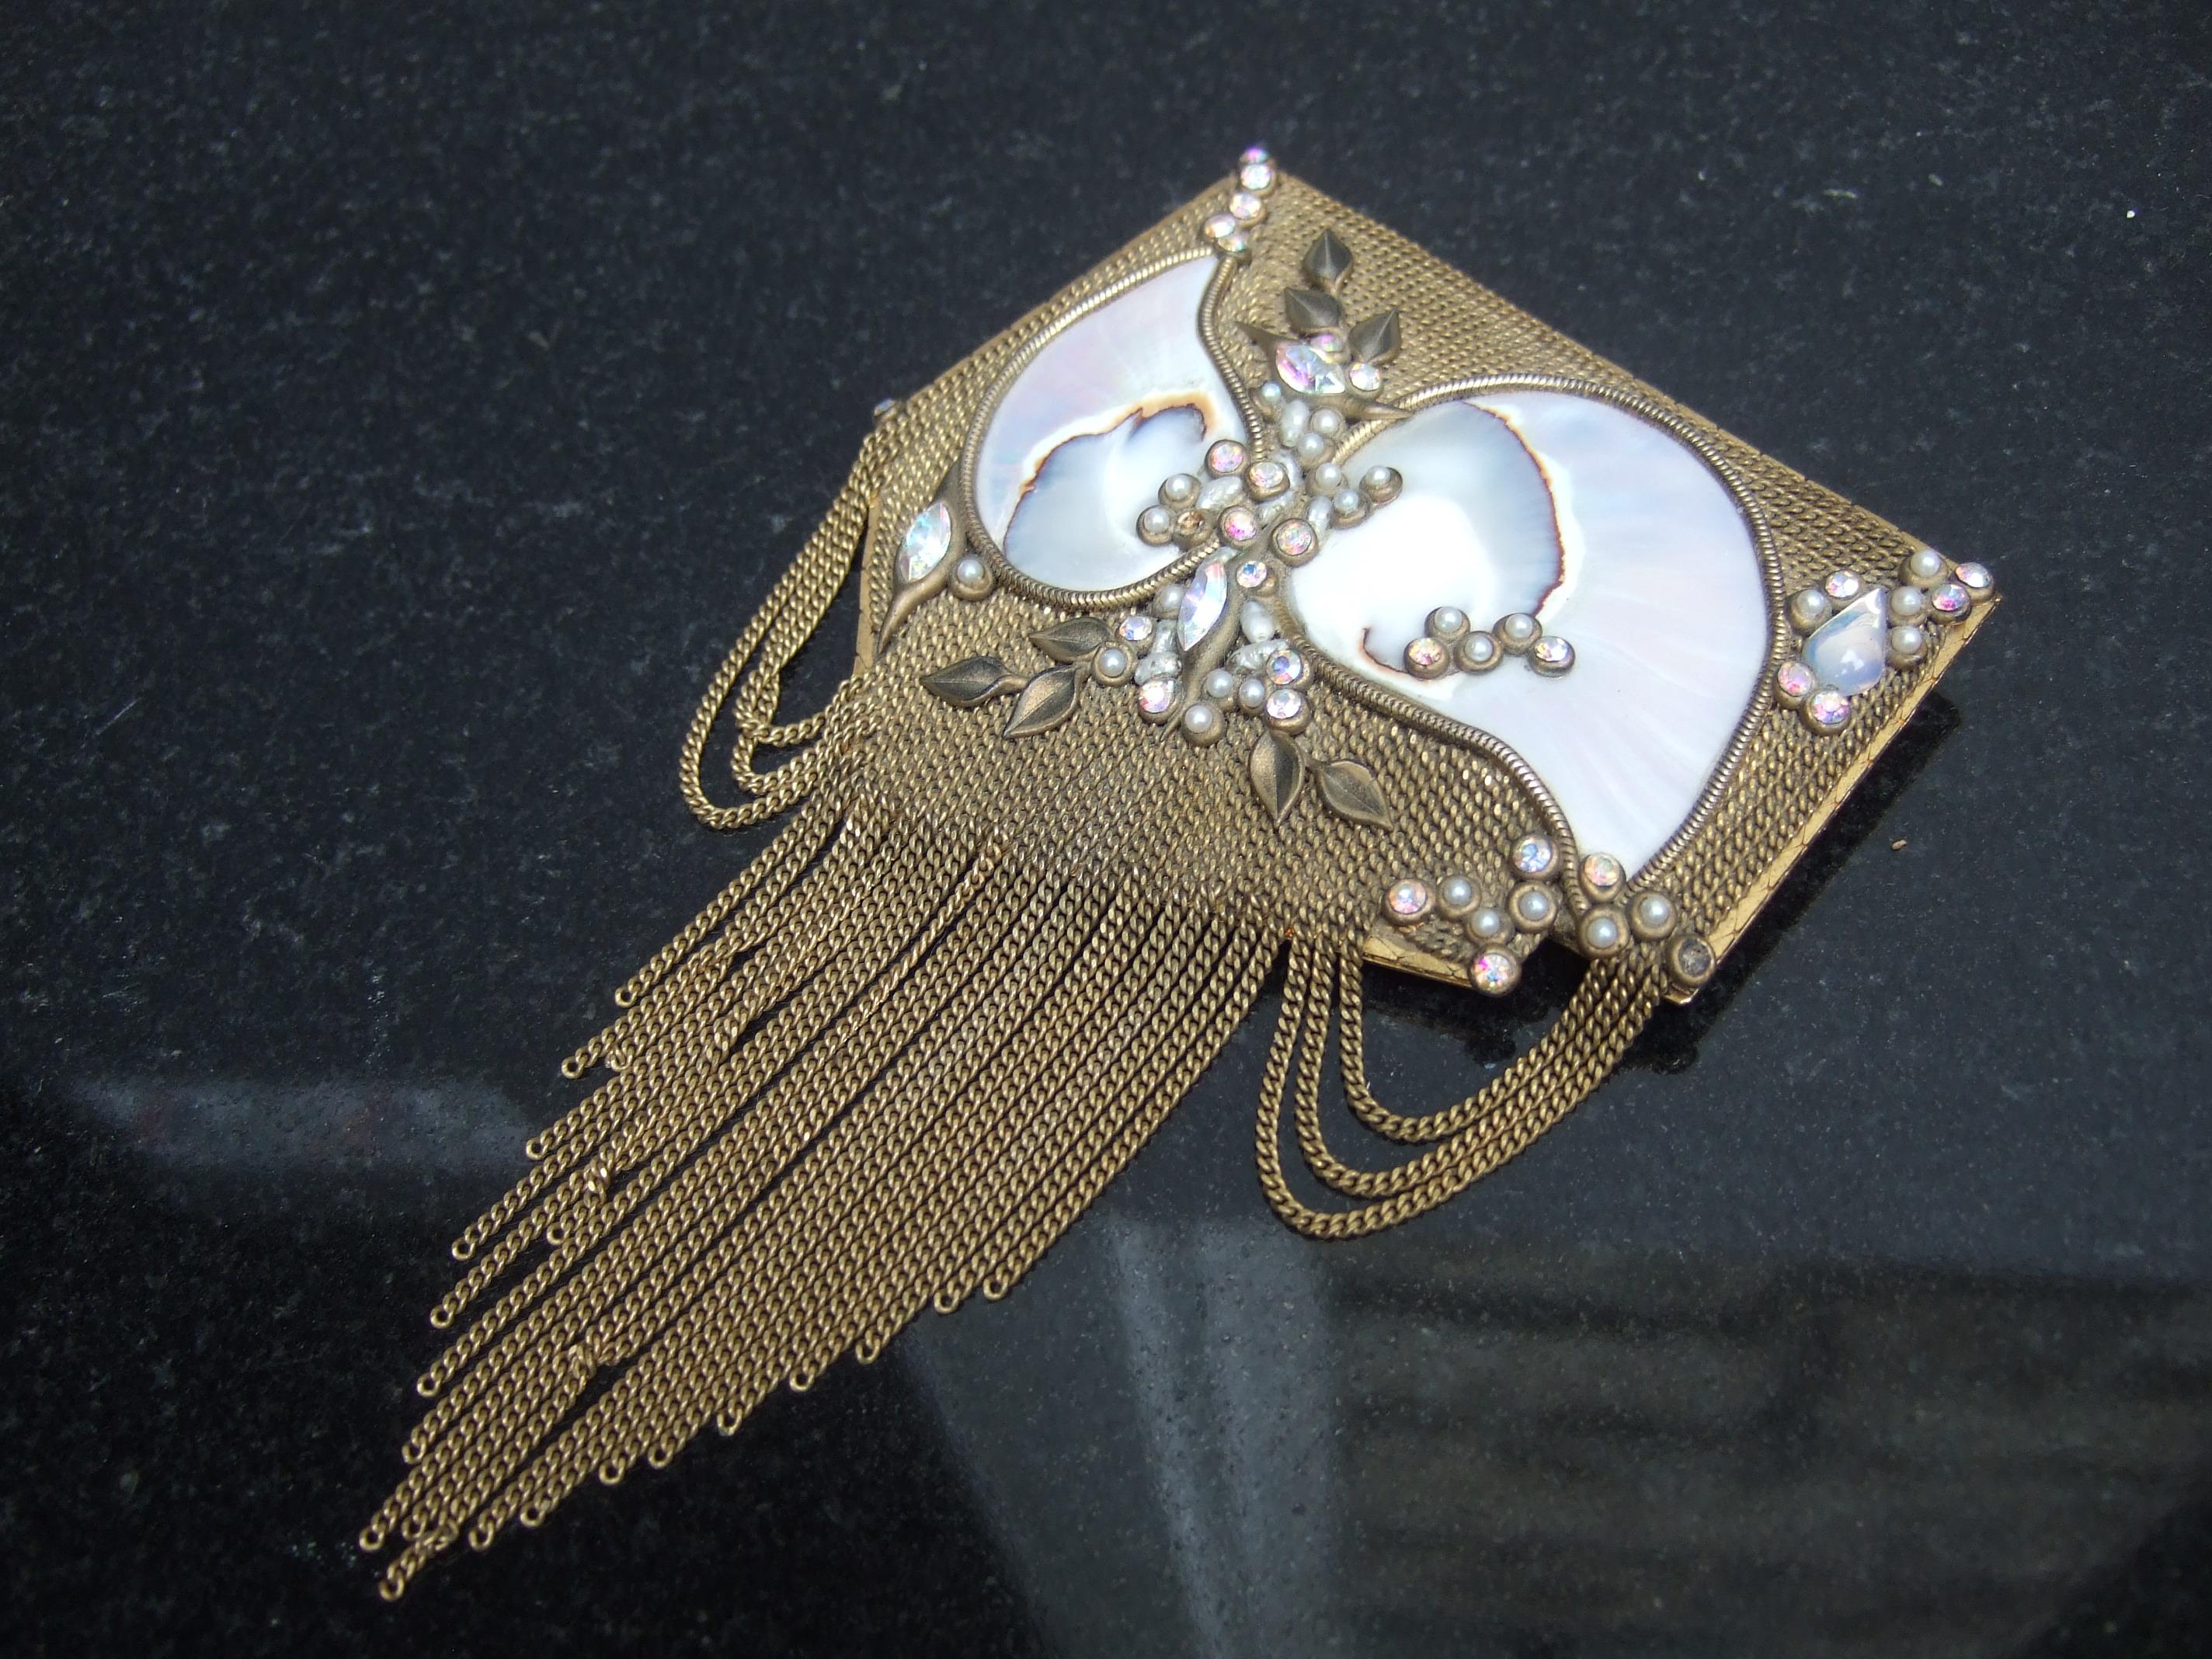  Mother of Pearl Jeweled Artisan Massive Gilt Metal Tassel Brooch c 1970s For Sale 9